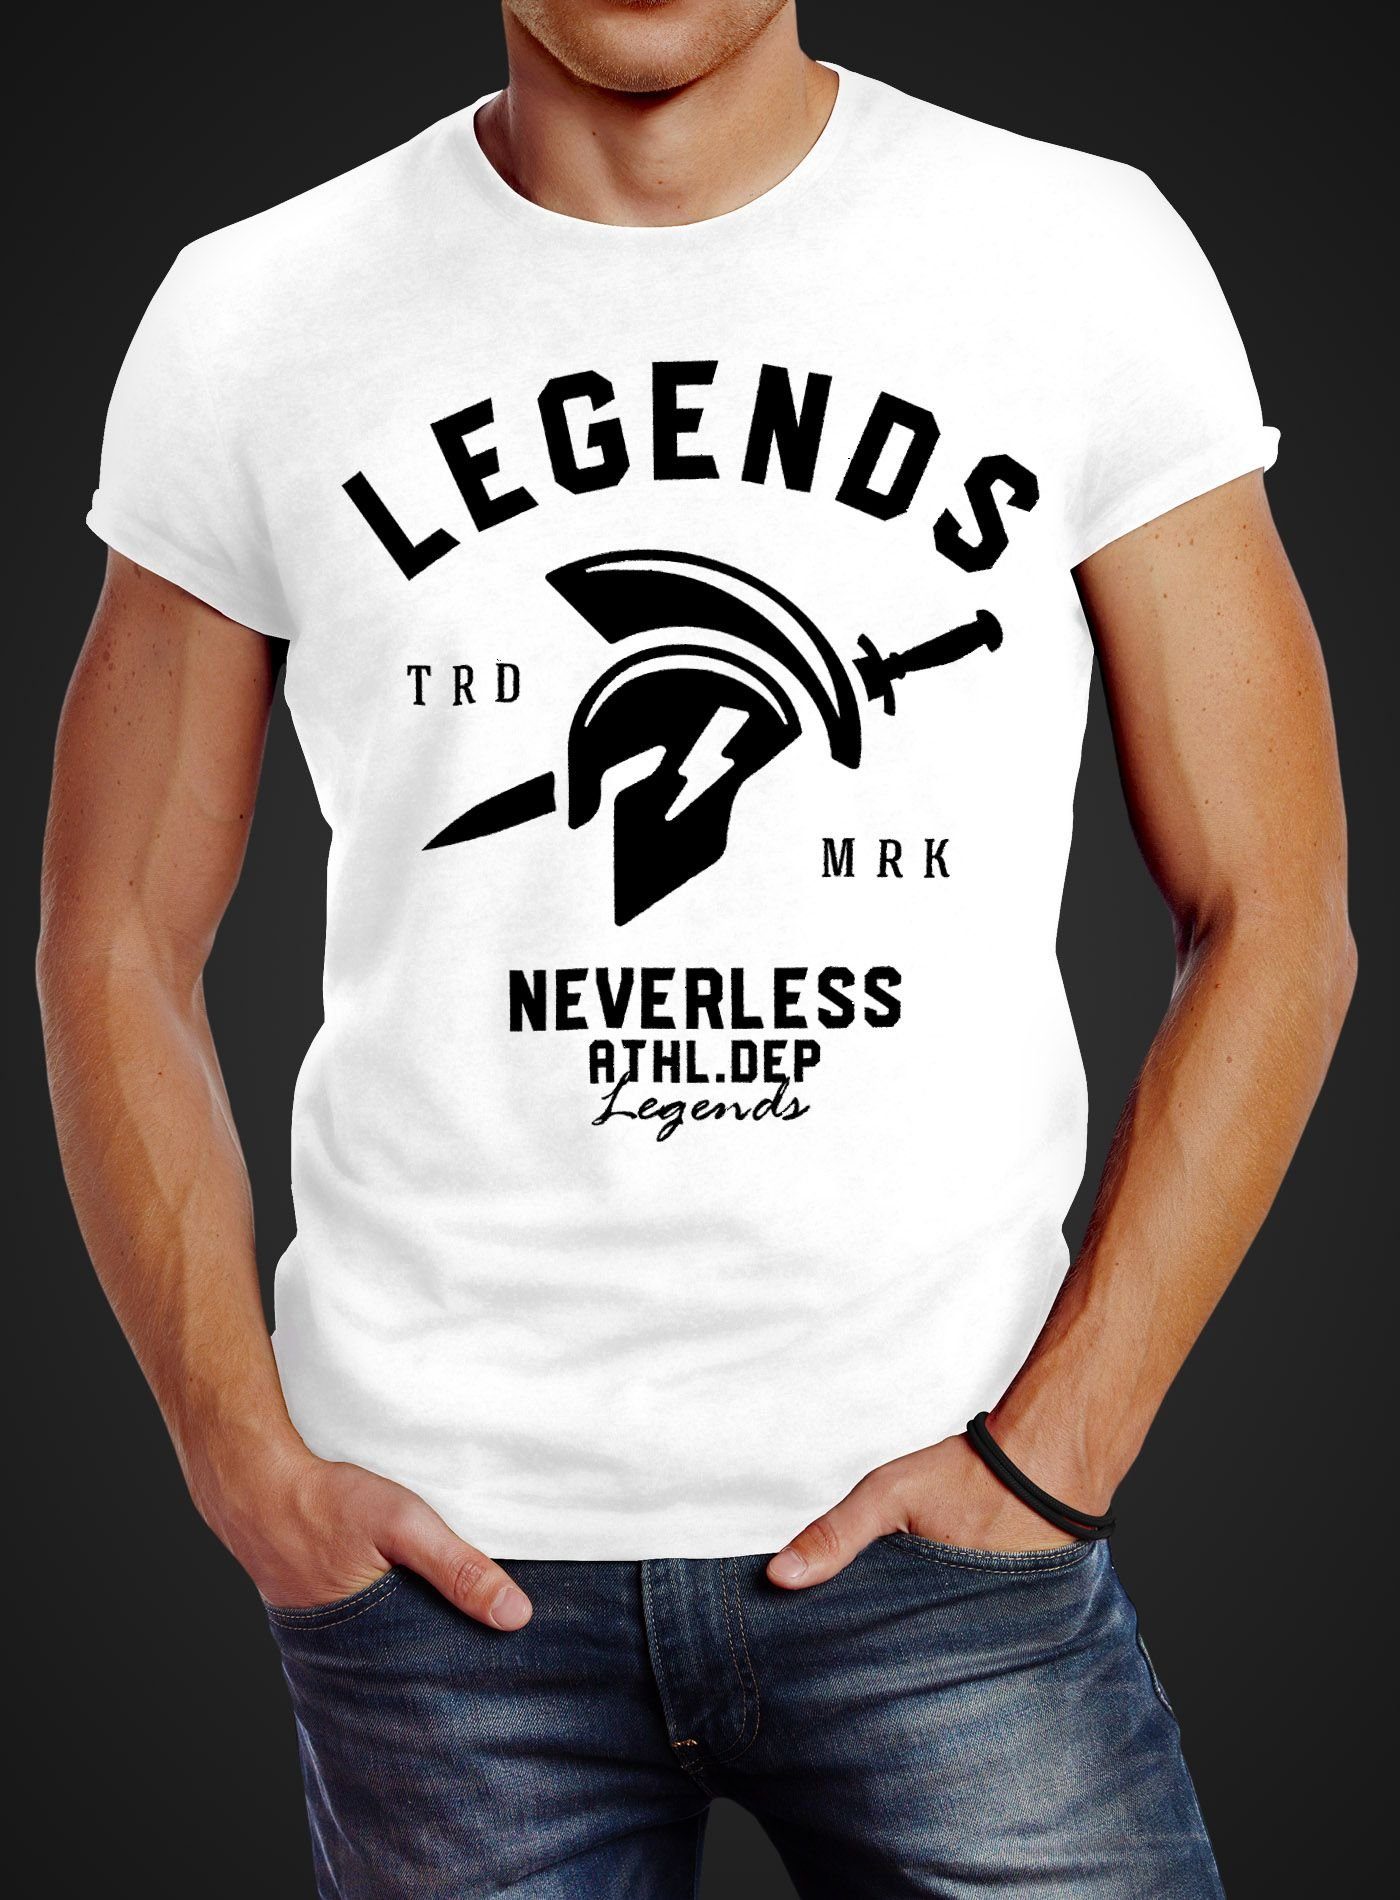 Sparta Herren Neverless® Fitness Gym Sport Cooles weiß T-Shirt Print-Shirt Gladiator Athletics Print Legends Neverless mit